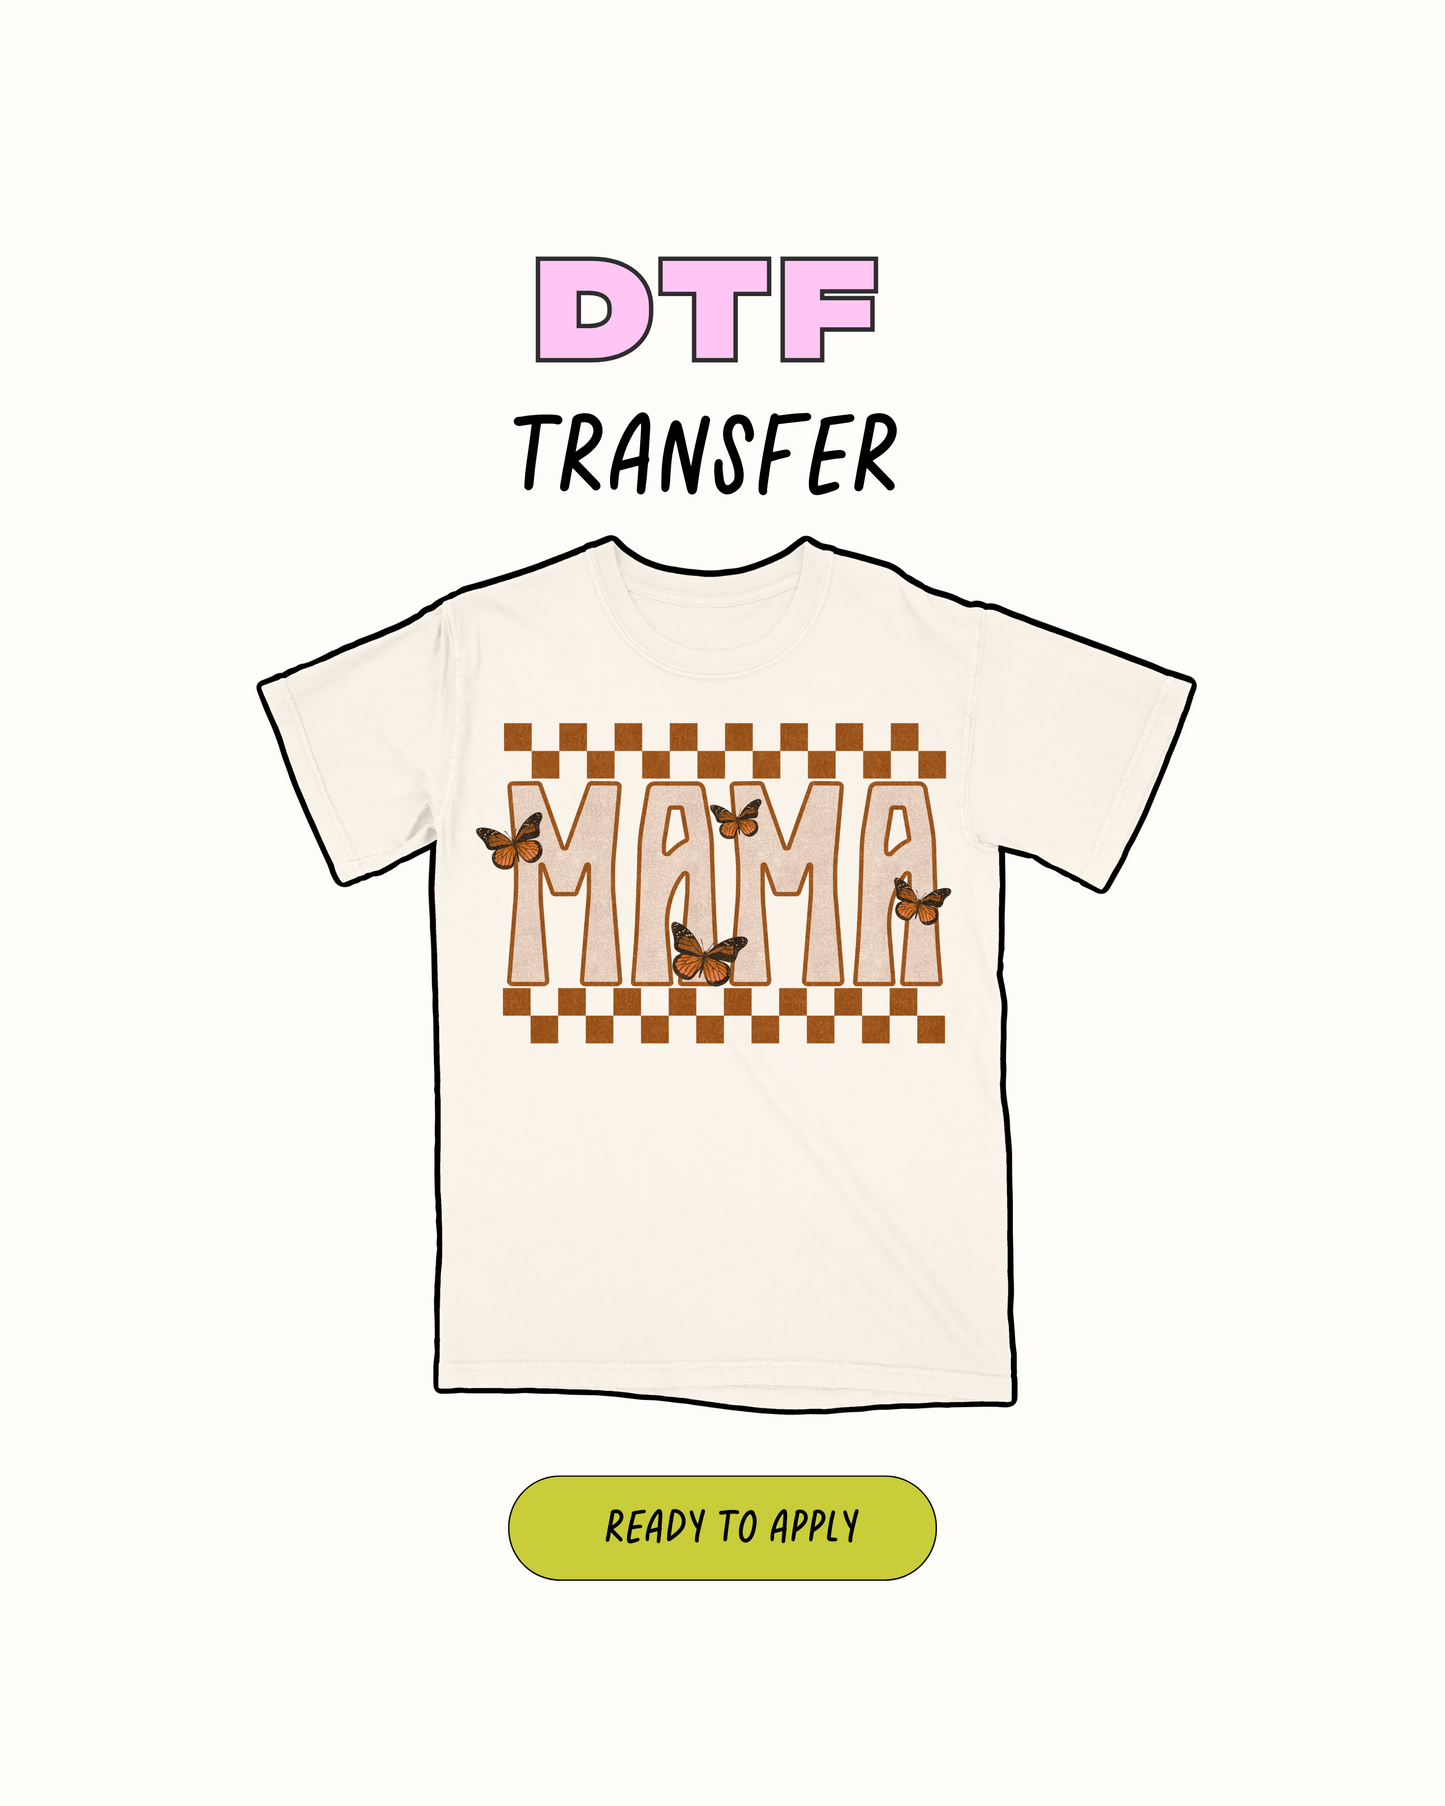 Mama checkered - DTF Transfer